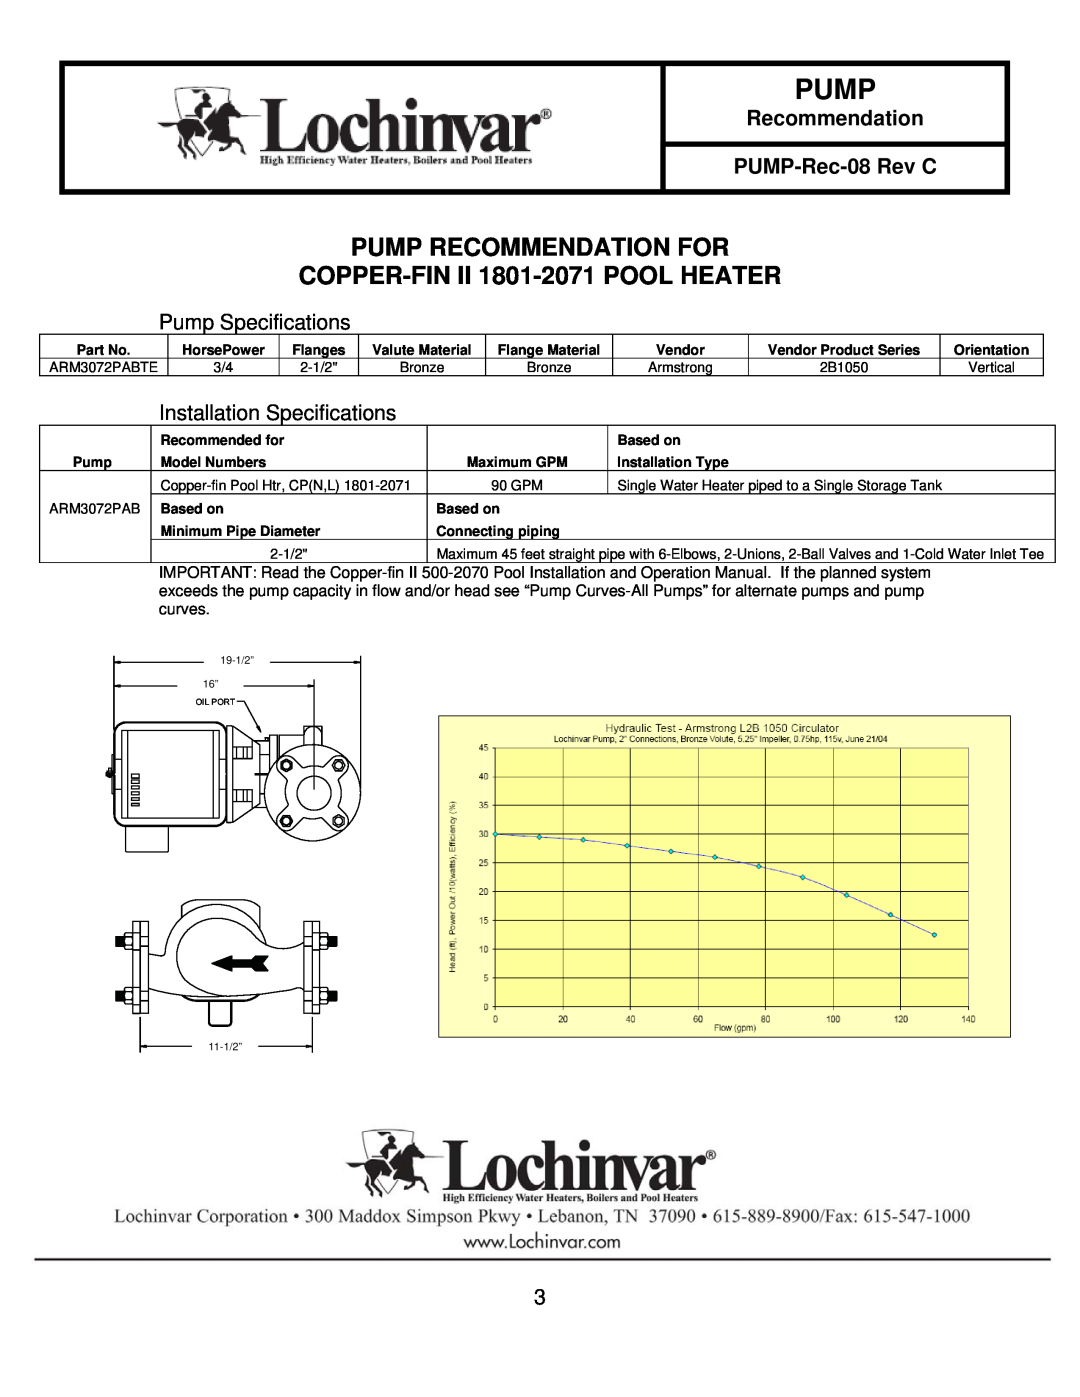 Lochinvar 401-751 COPPER-FINII 1801-2071POOL HEATER, Pump Recommendation For, Pump Specifications, PUMP-Rec-08Rev C 